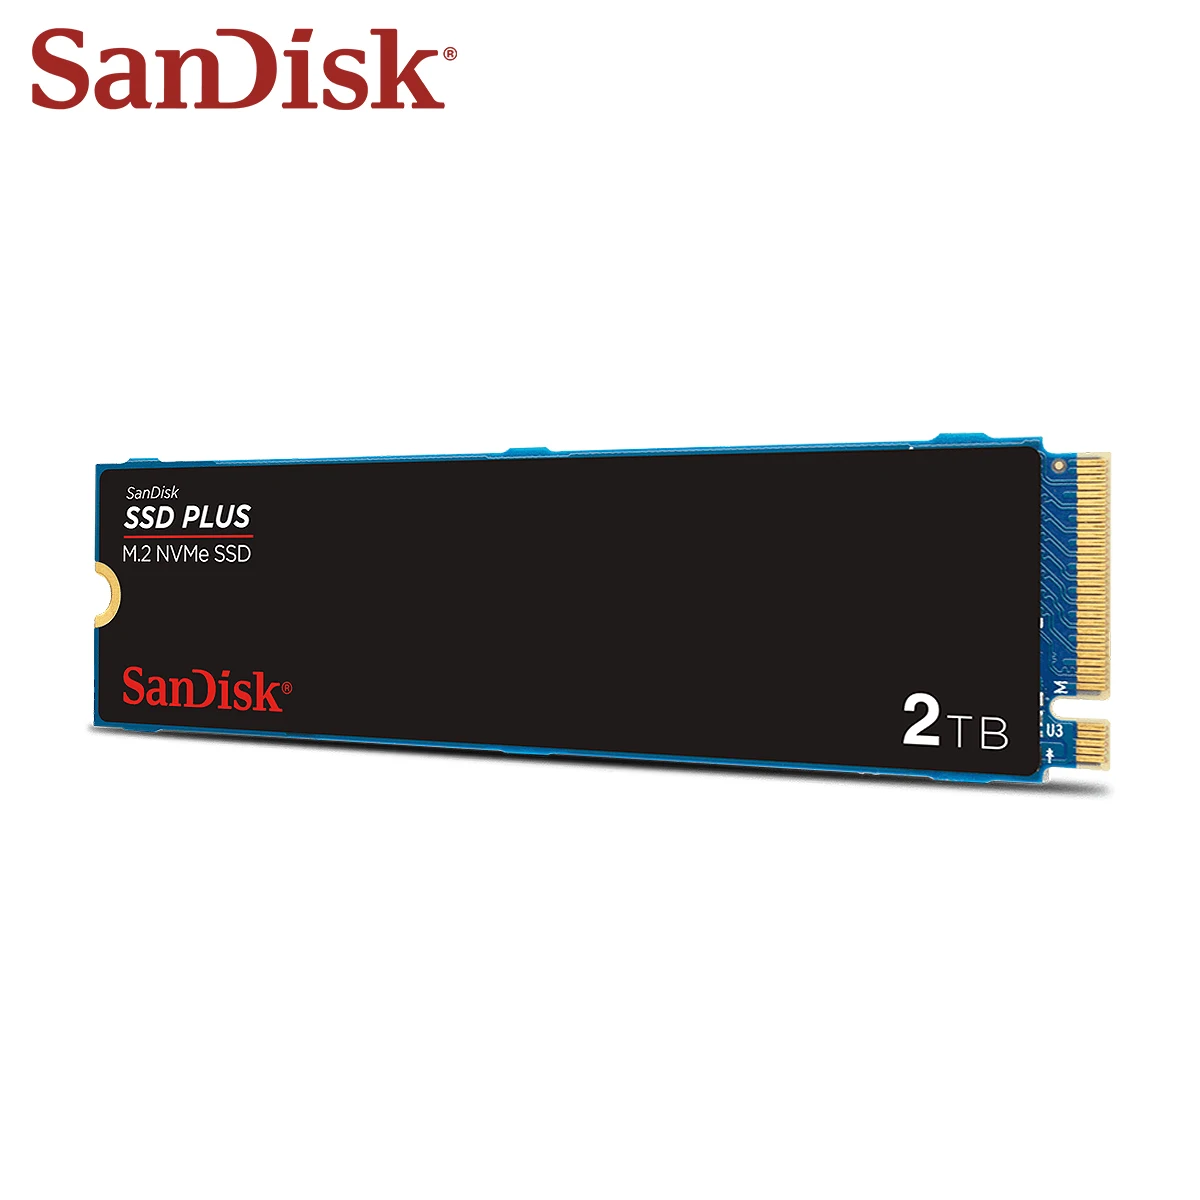 Original SanDisk Solid State Disk  SSD Plus M.2 SSD 250GB 500GB 1TB 2TB  NVMe M2 2280 PCIe Gen 3x4 Internal Solid State Drive